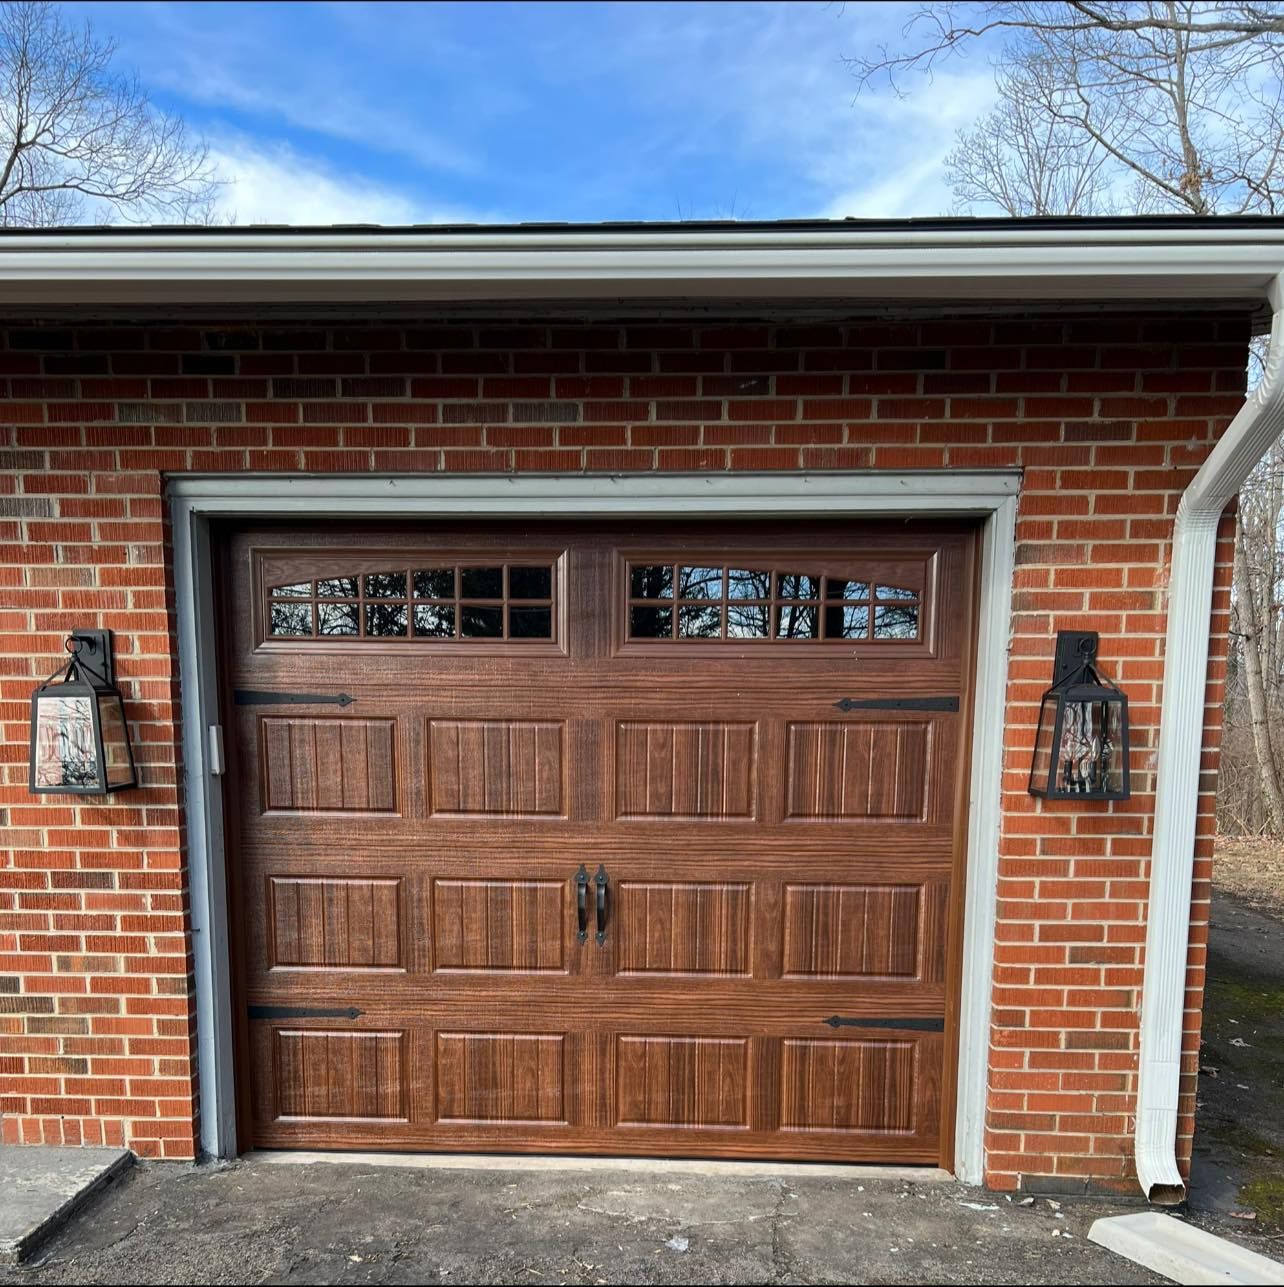 Garage Door Repair for Camco Commercial Door Company in Anderson, TN